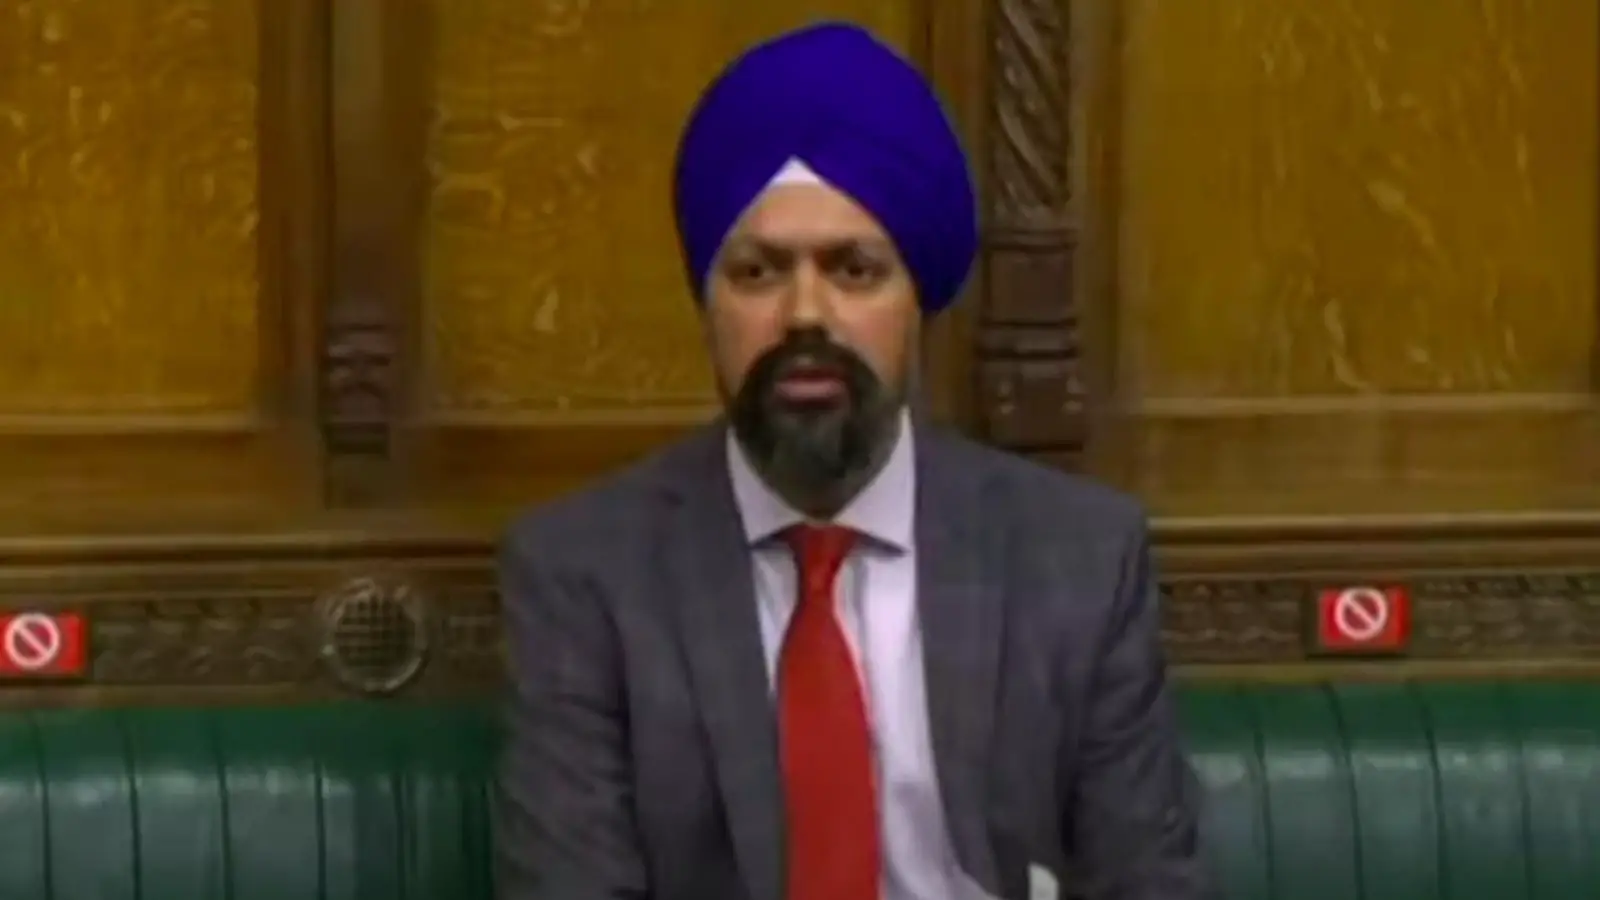 Tanmanjeet Singh Dhesi Meme Template of UK Parliament